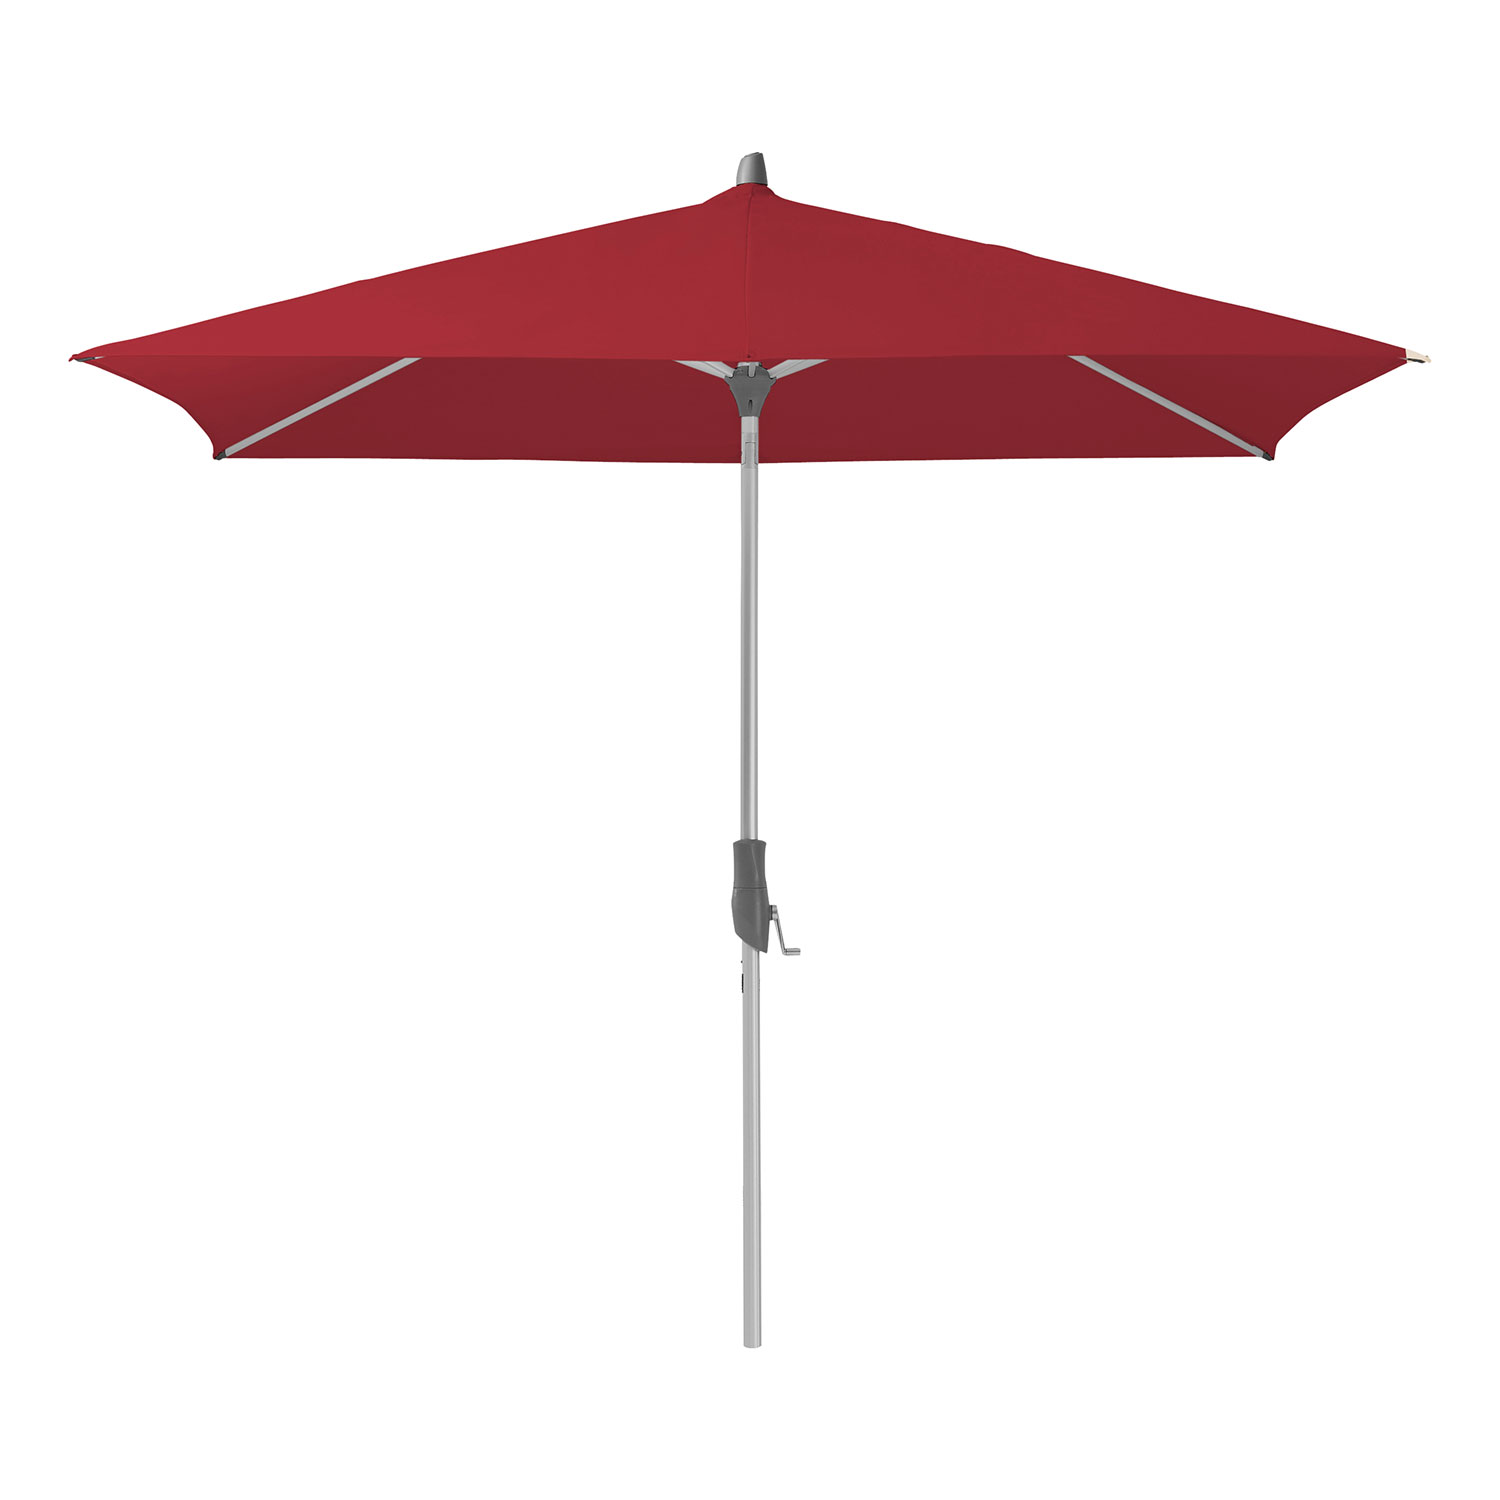 Glatz Alu-twist parasoll 210×150 cm kat.5 646 rubino